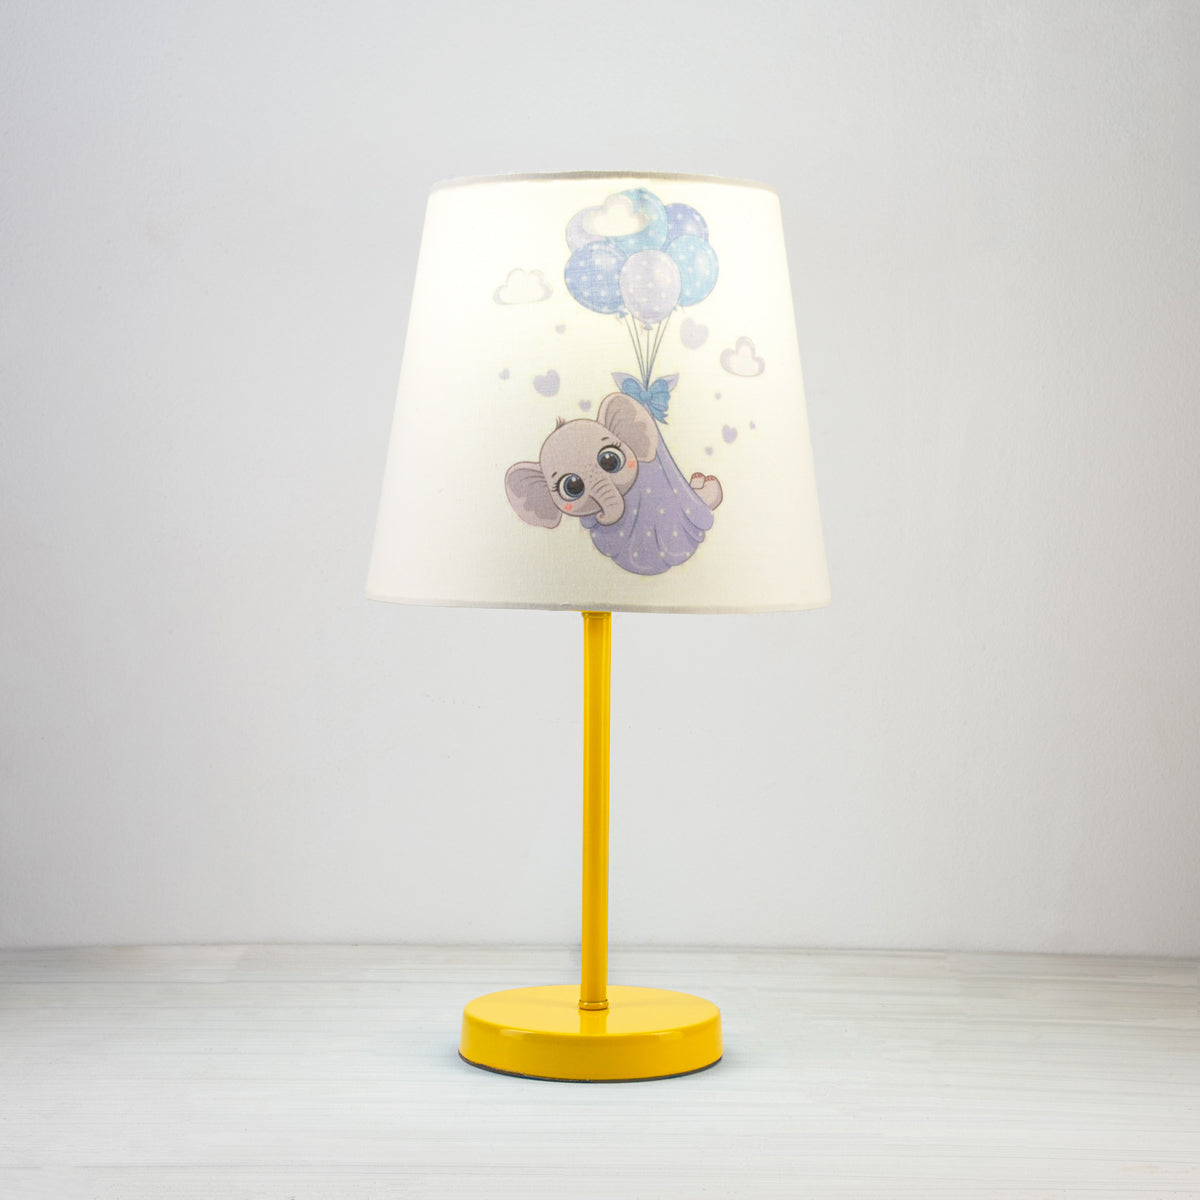 Table lamp for children, 23 x 45 cm - TBS898